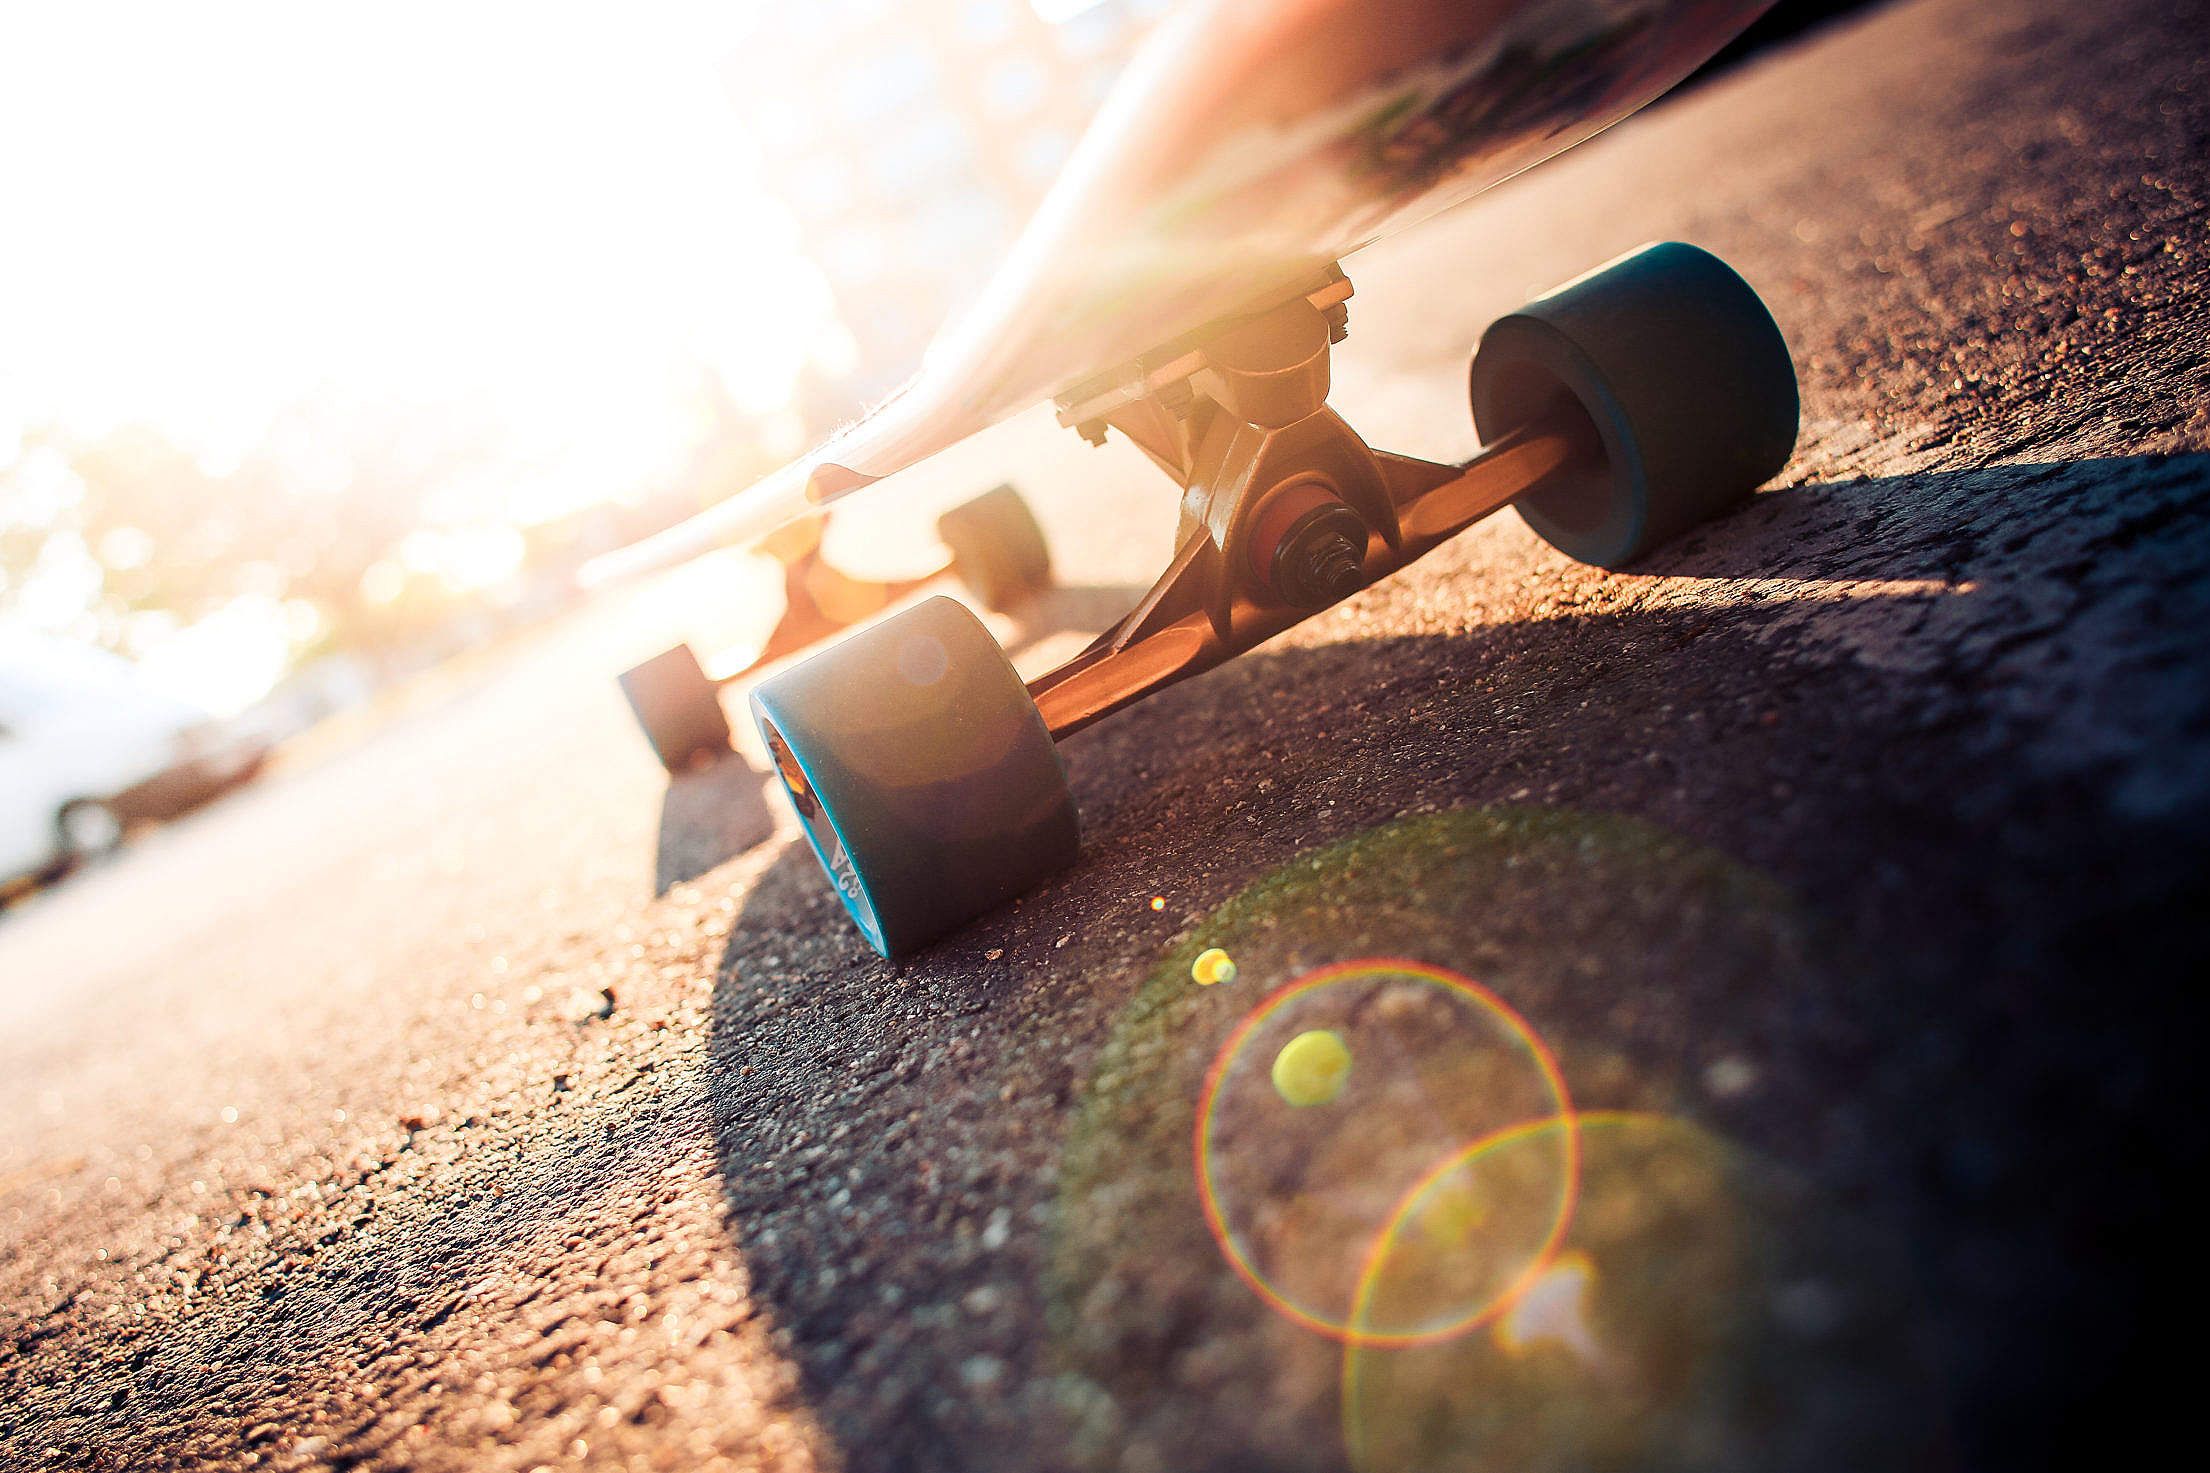 Skateboard Photo. Free Stock Image